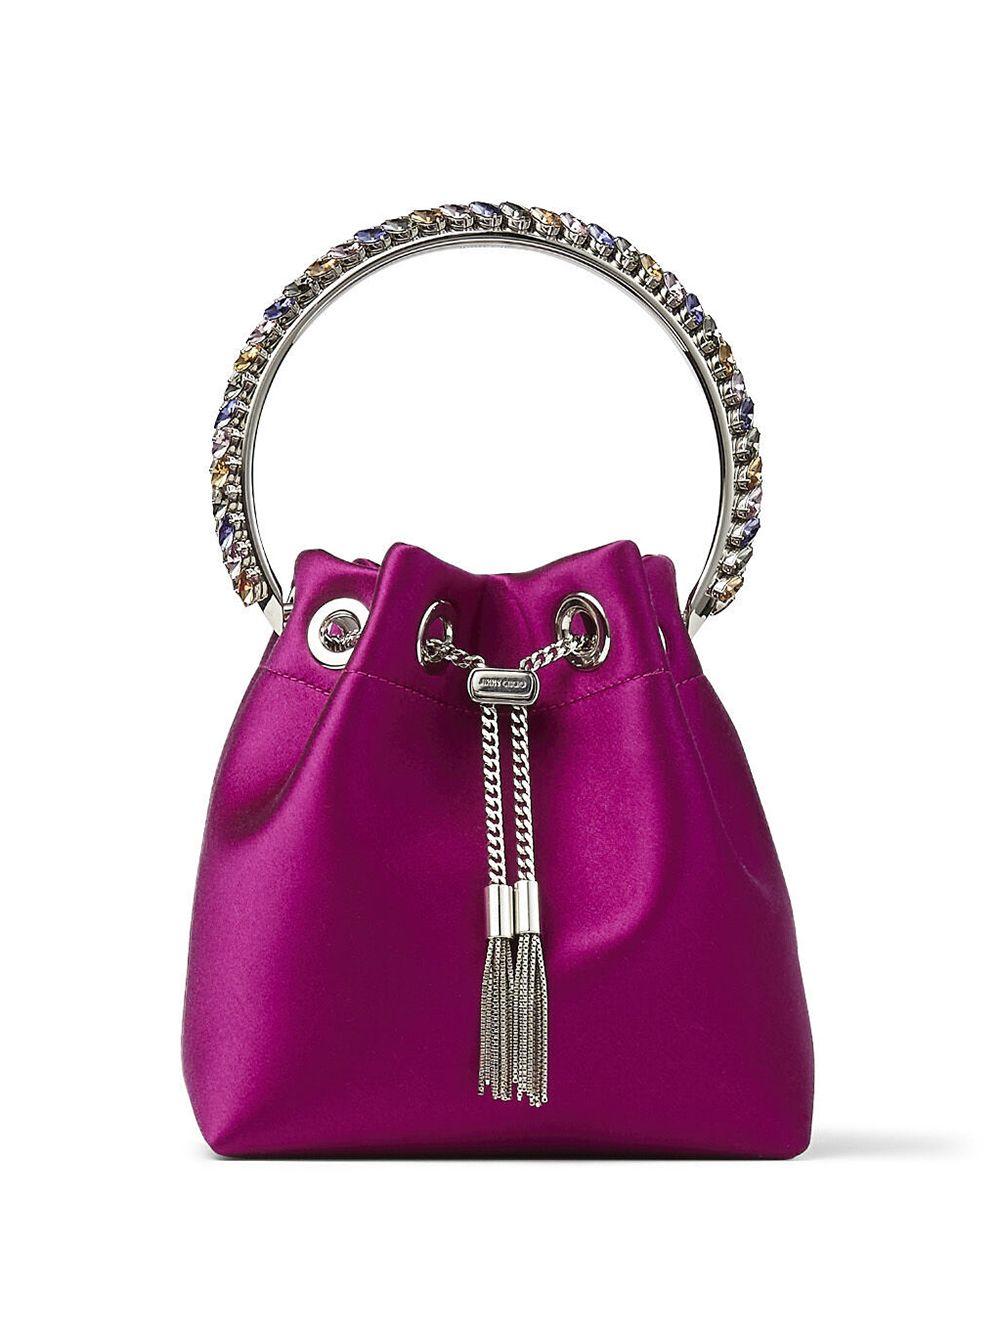 Jimmy Choo Silk Bon Bon Embellished Top Handle Bag in Purple - Lyst